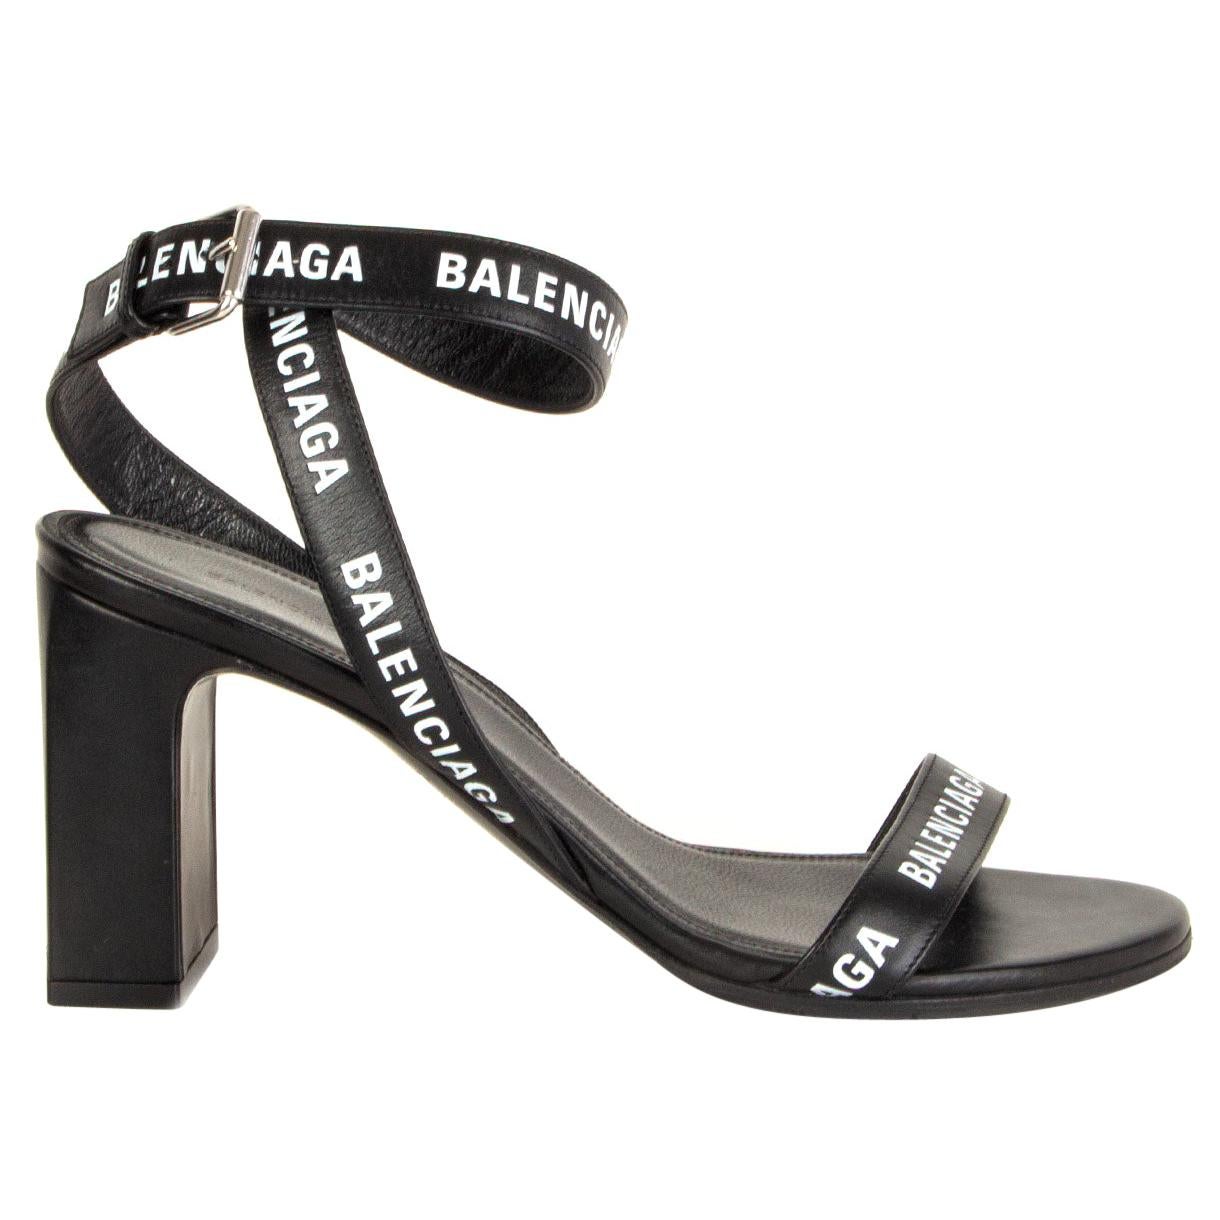 BALENCIAGA black leather LOGO BLOCK HEEL Sandals Shoes 36.5